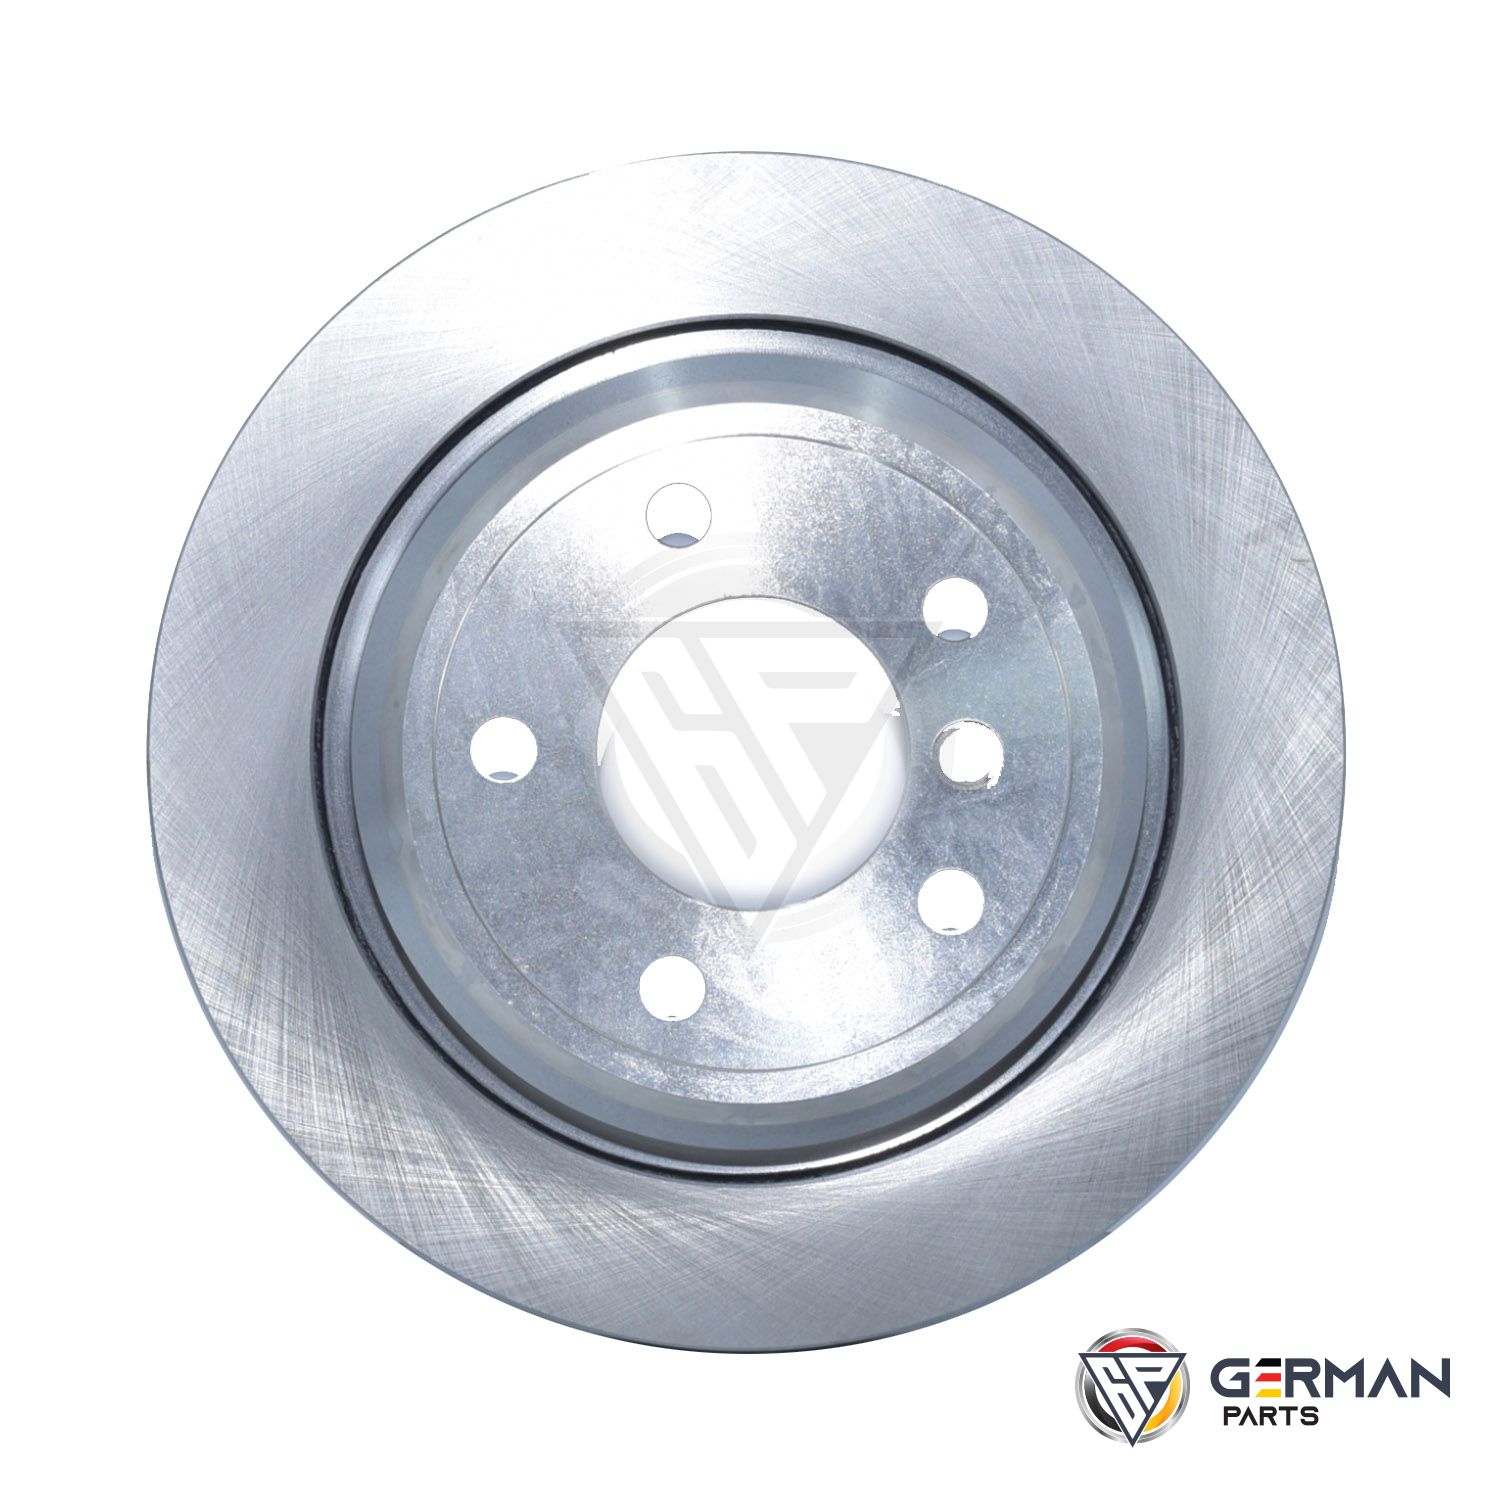 Buy TRW Rear Brake Disc 34216767060 - German Parts